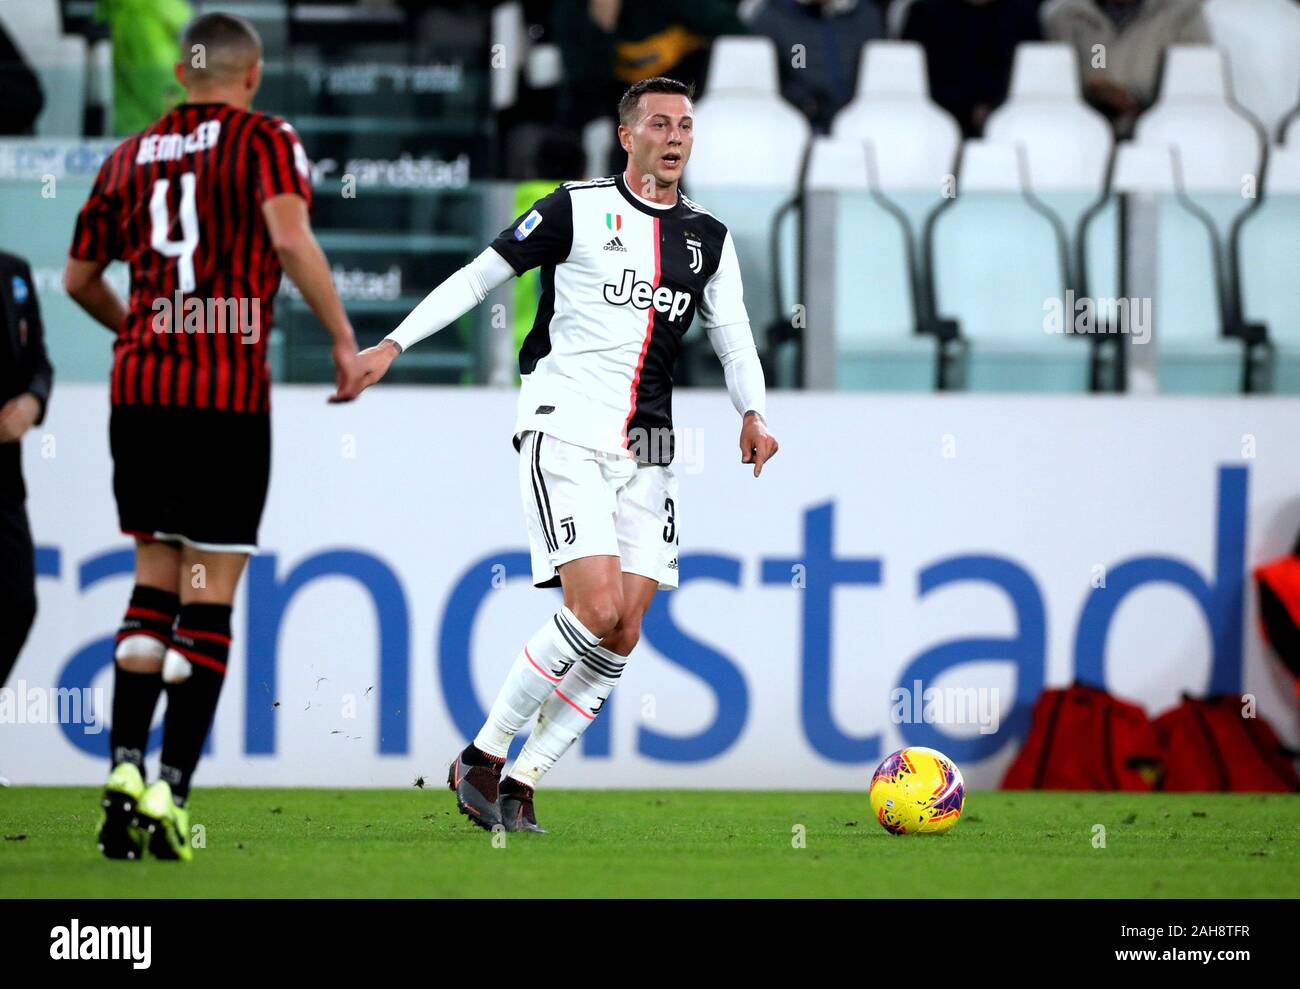 Turin, ITALIE - 10 novembre 2019: Federico Bernardeschi en action pendant la série A 2019/2020 JUVENTUS / MILAN au stade Allianz. Banque D'Images